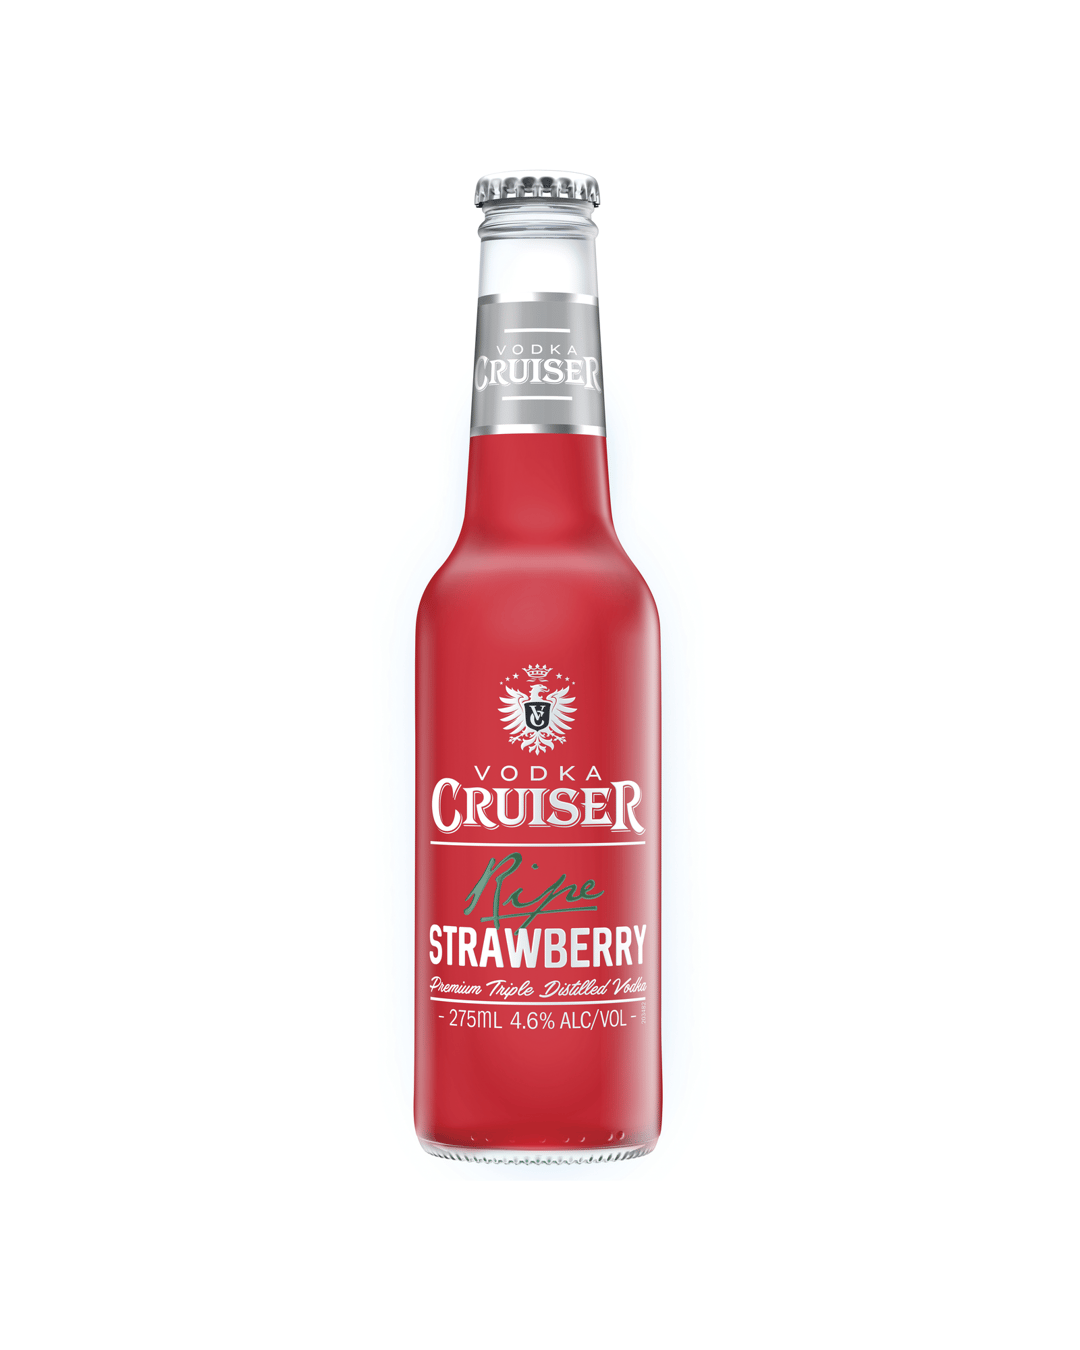 Vodka Cruiser x Budgy Smuggler Bottles - Vodka Cruiser